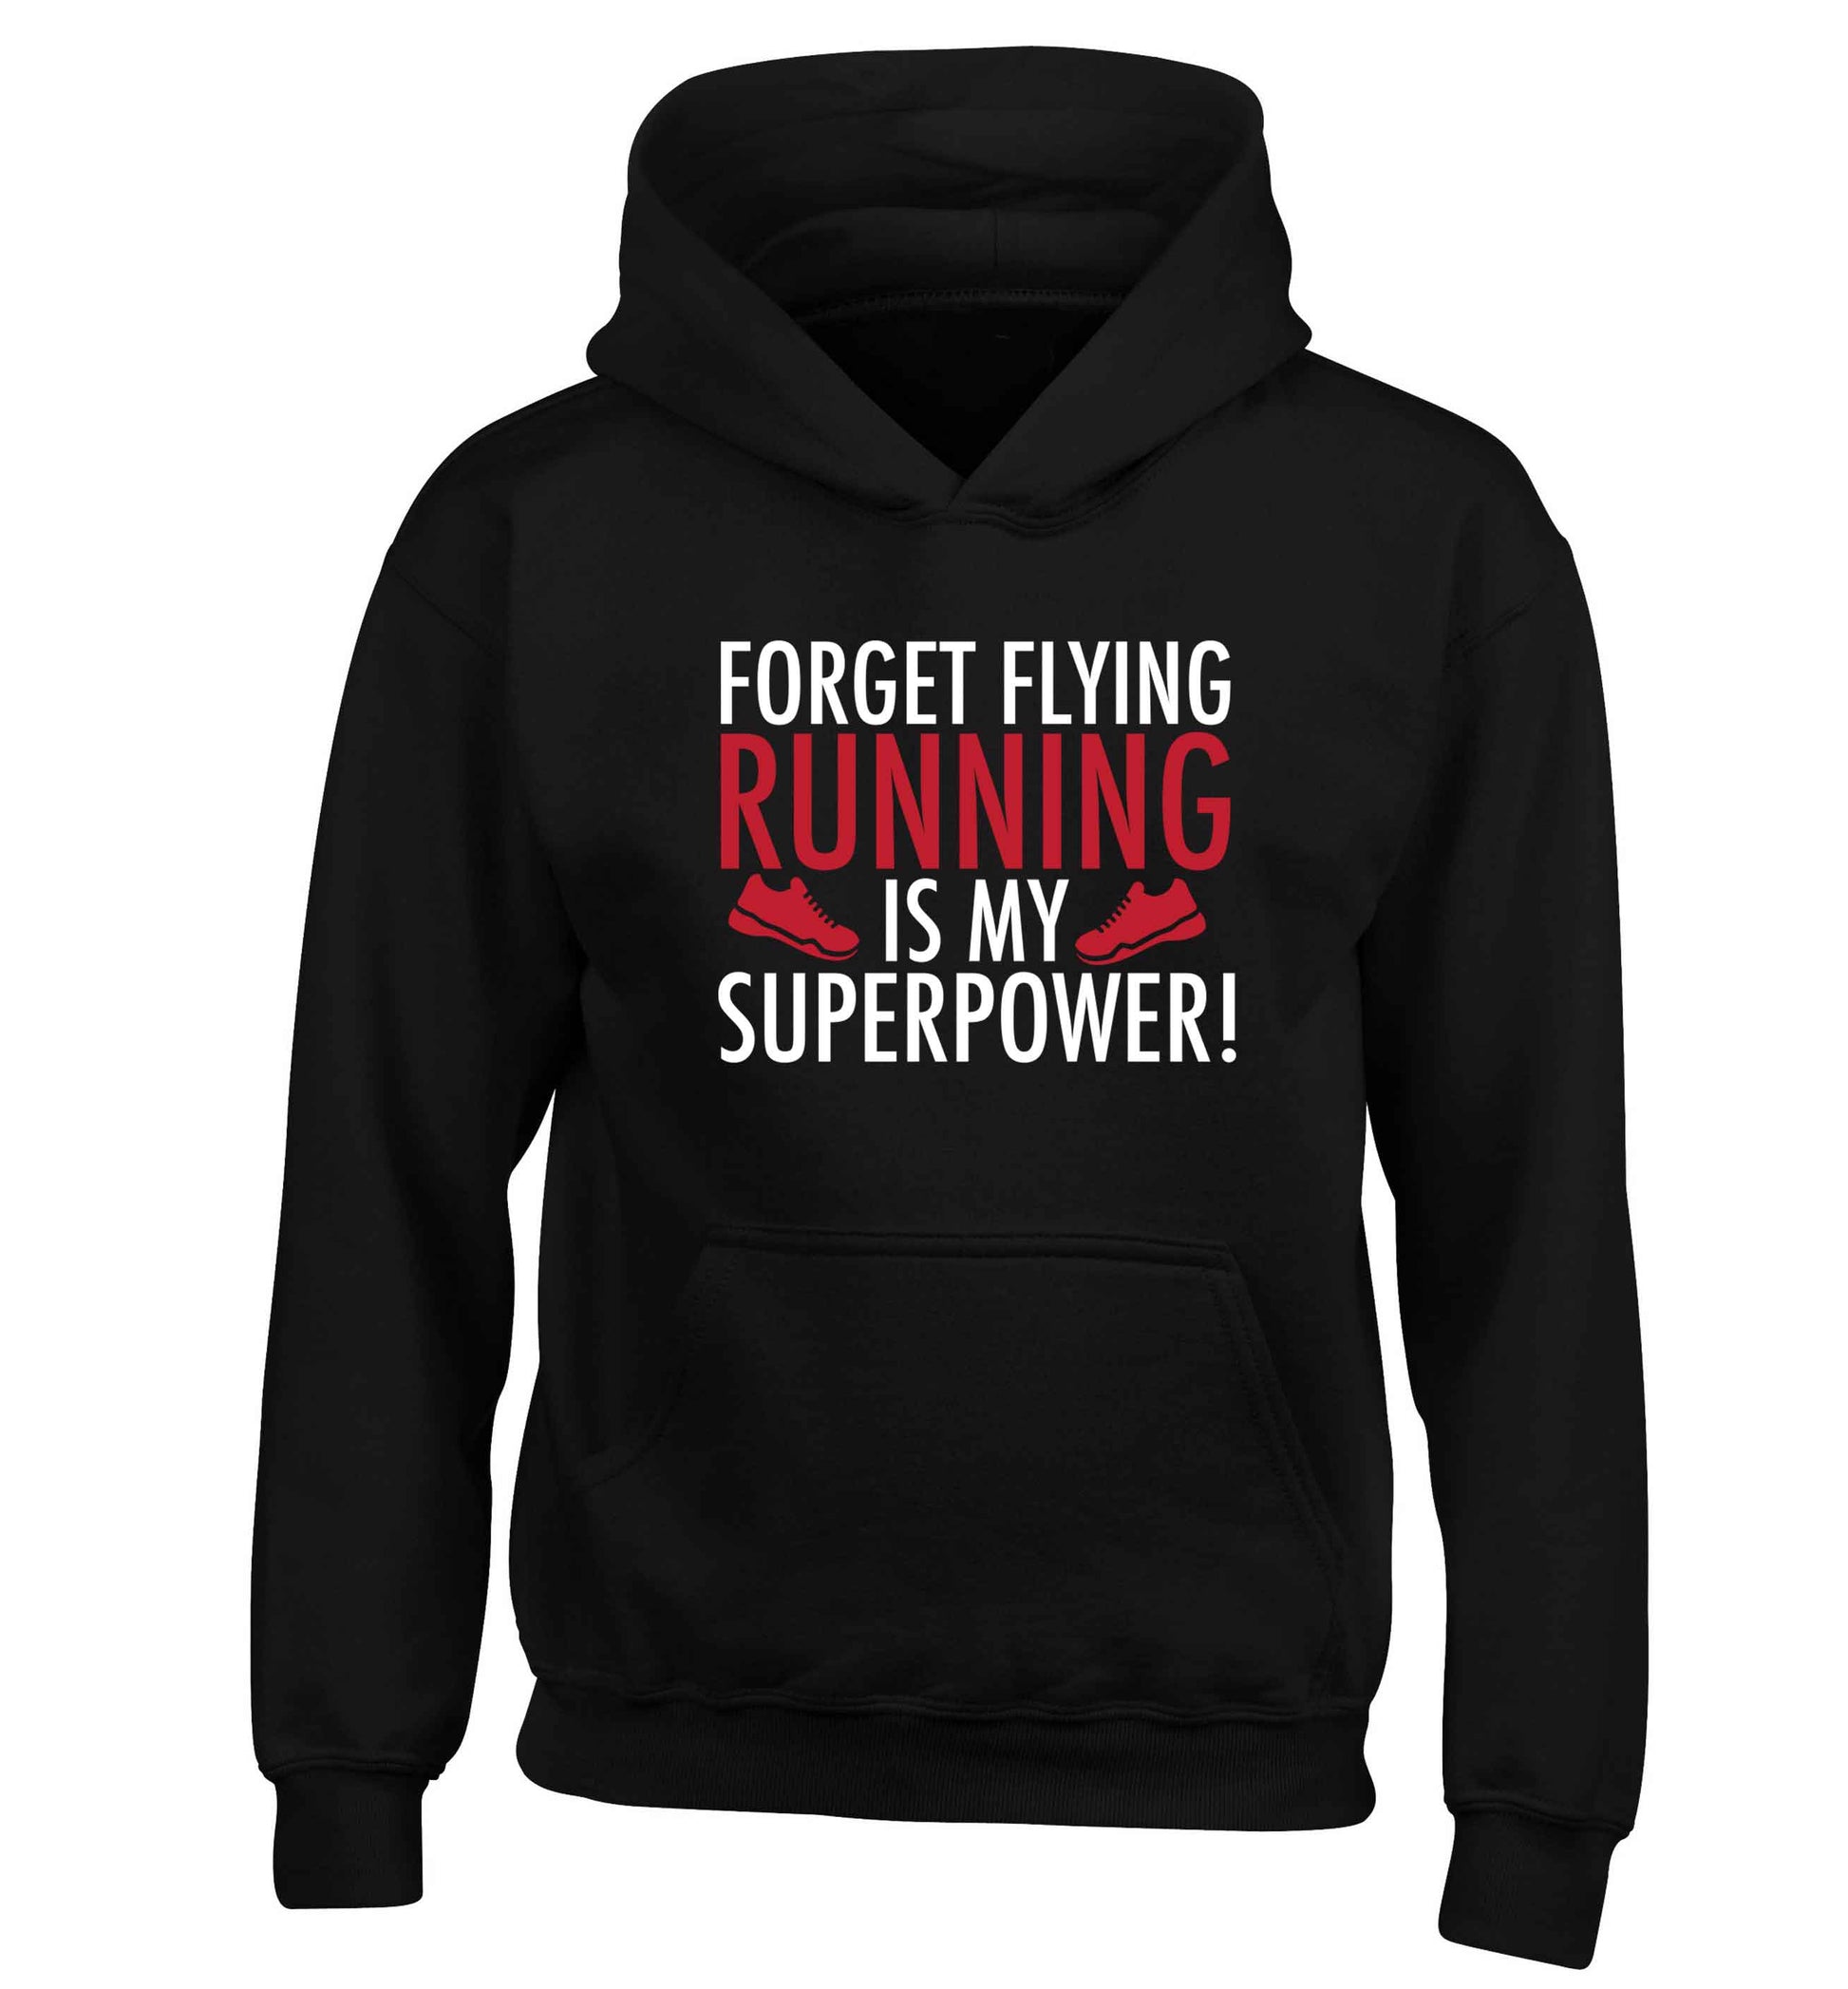 Forget flying running is my superpower children's black hoodie 12-13 Years